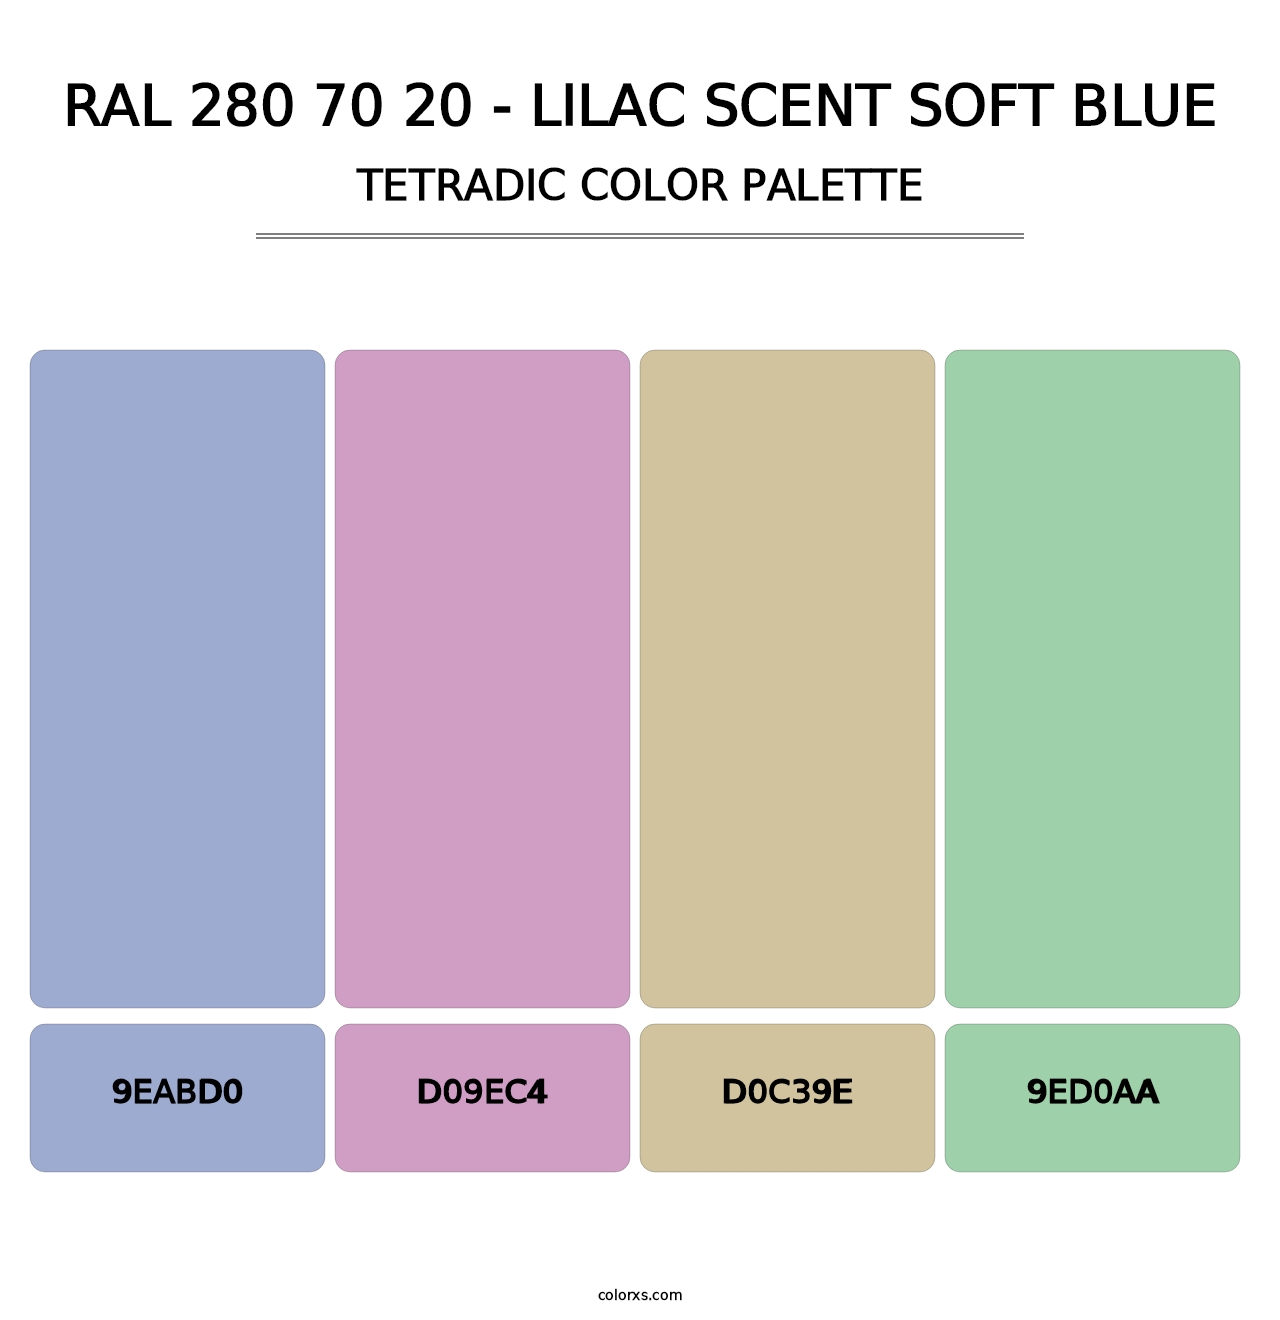 RAL 280 70 20 - Lilac Scent Soft Blue - Tetradic Color Palette